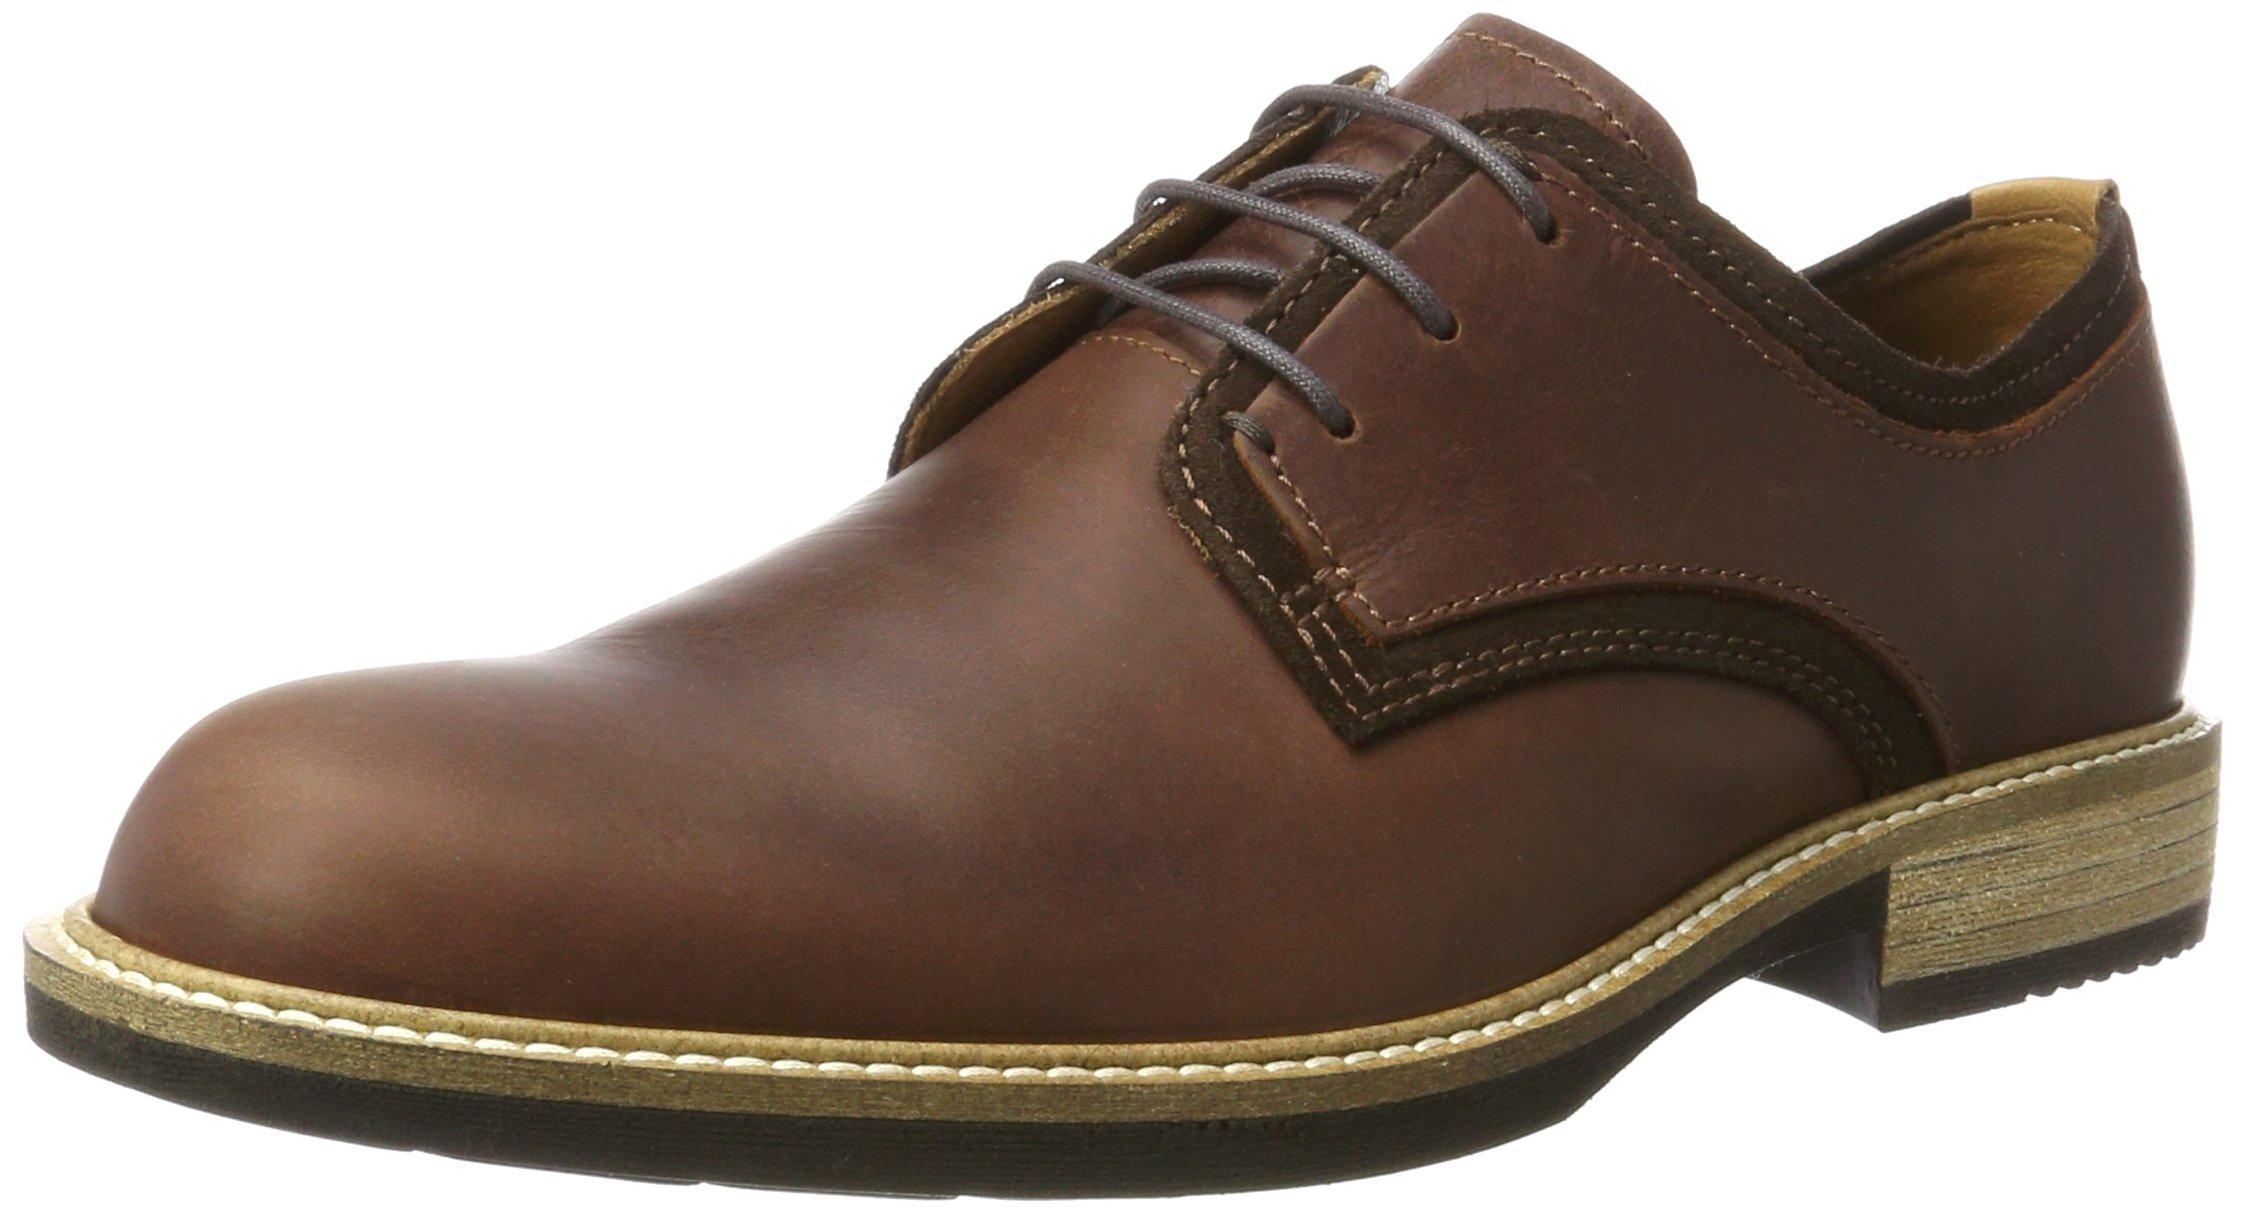 Ecco Leather Kenton Plain Toe Tie Oxford in Brown for Men - Lyst